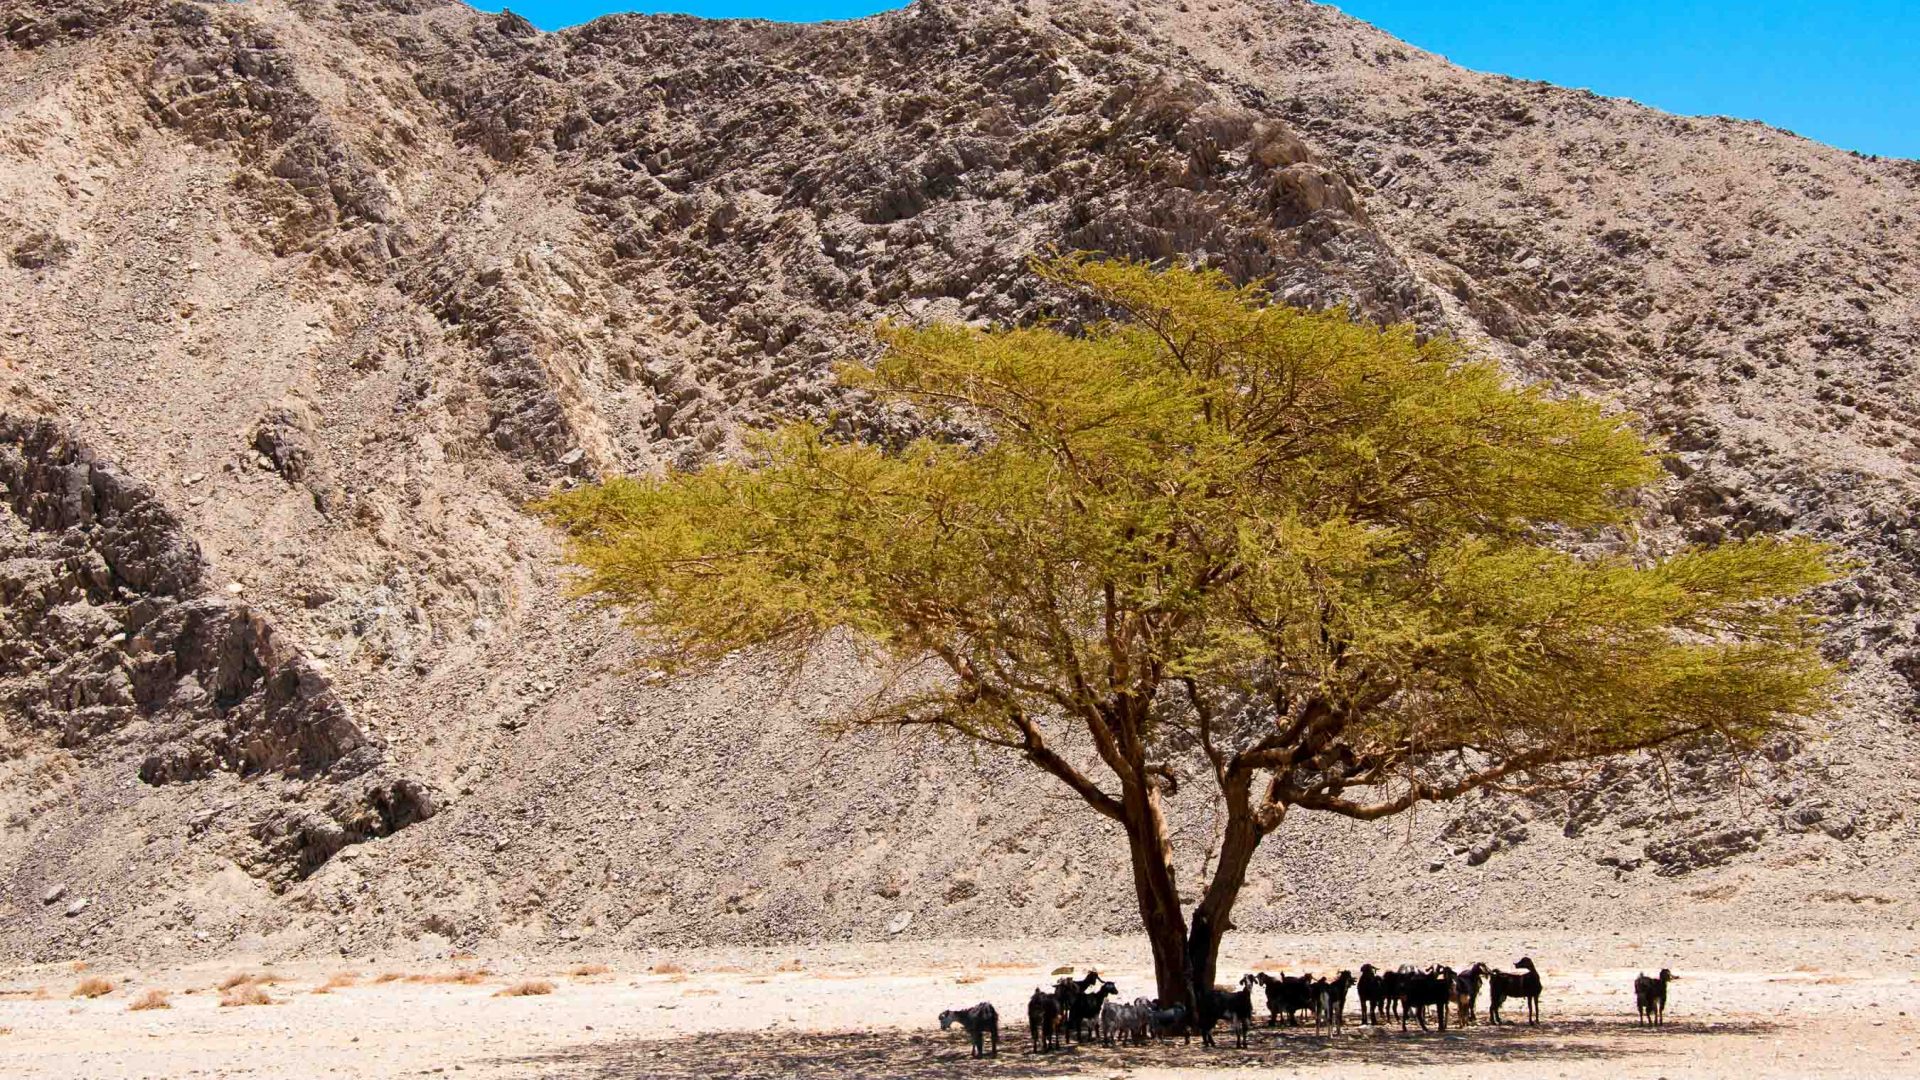 Goats seeking shelter under an acacia tree in the Eastern Desert.